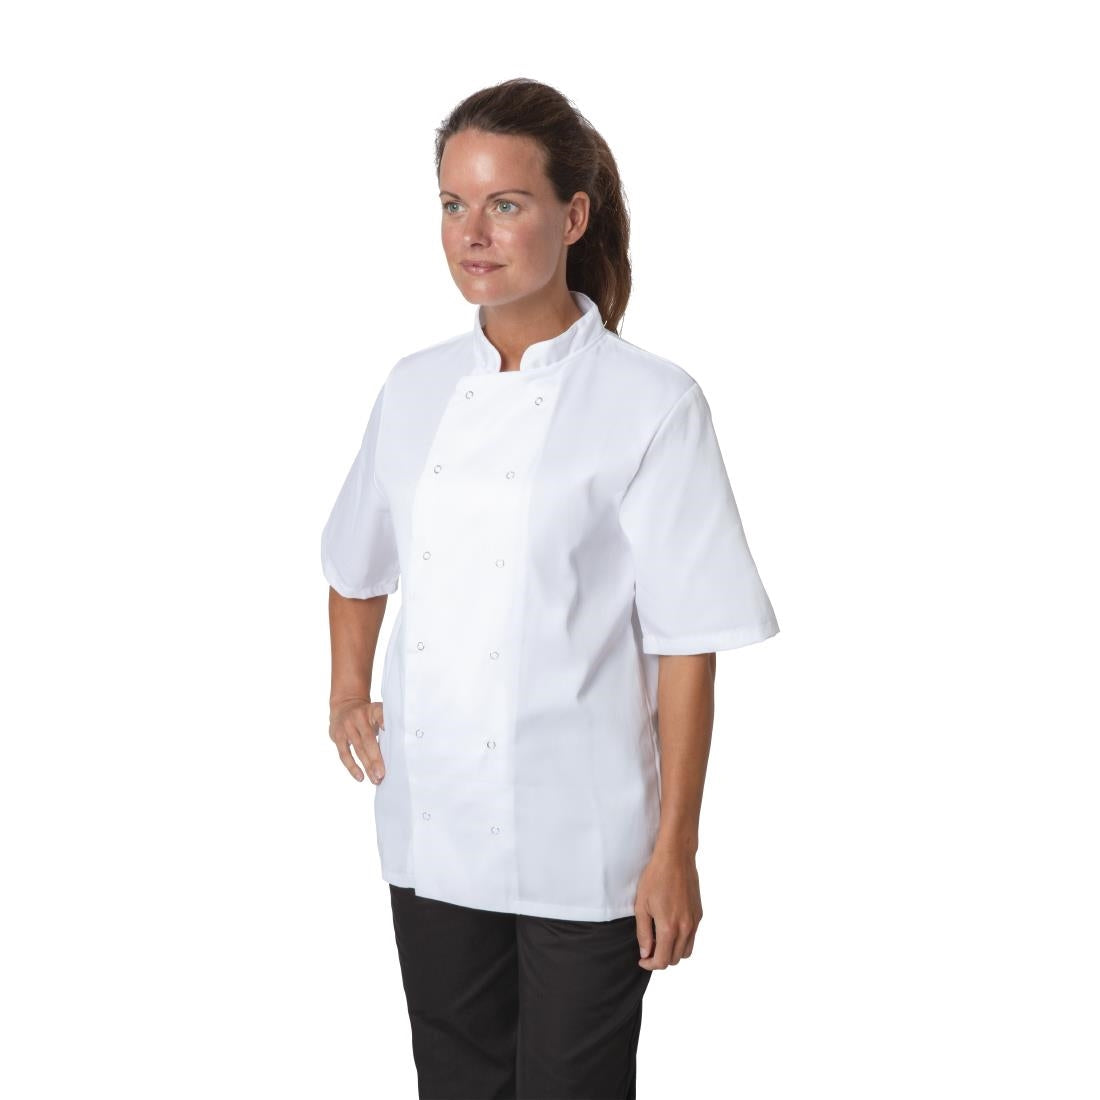 B250-L Whites Boston Unisex Short Sleeve Chefs Jacket White L JD Catering Equipment Solutions Ltd